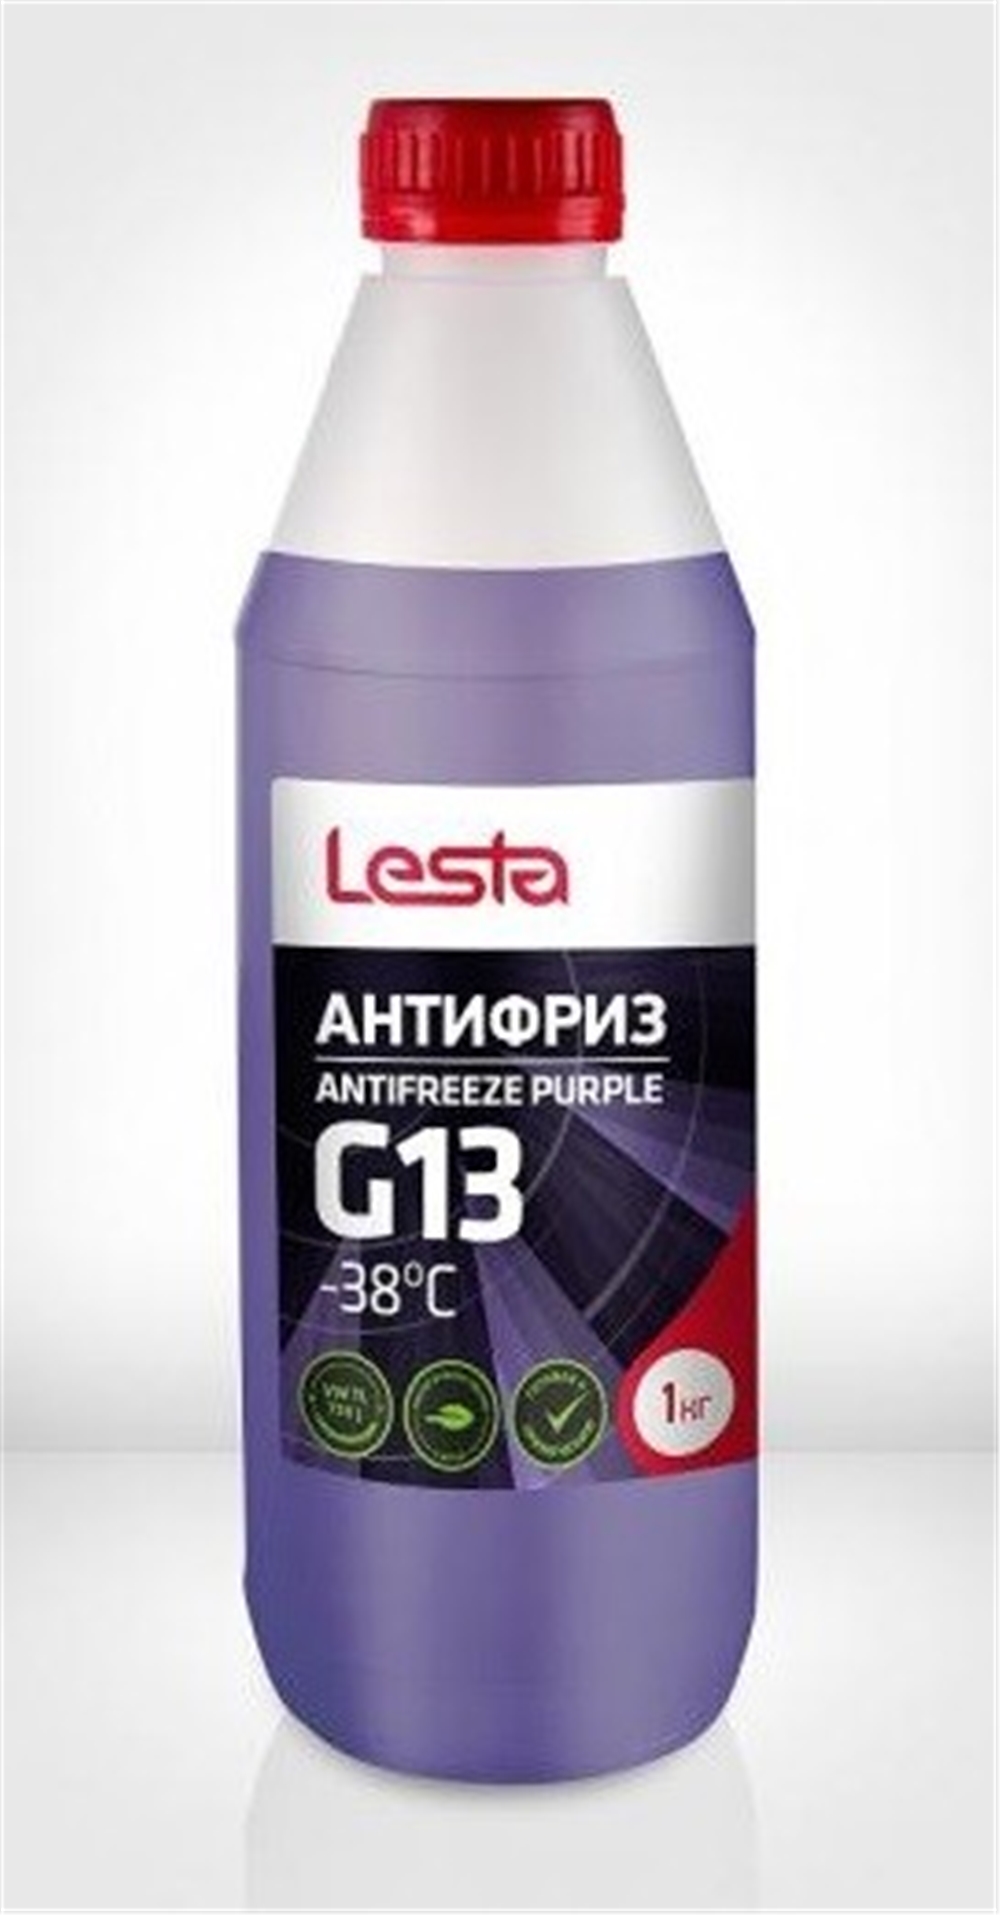 LESASA38G13RU1 Антифриз 1 кг.. фиолет